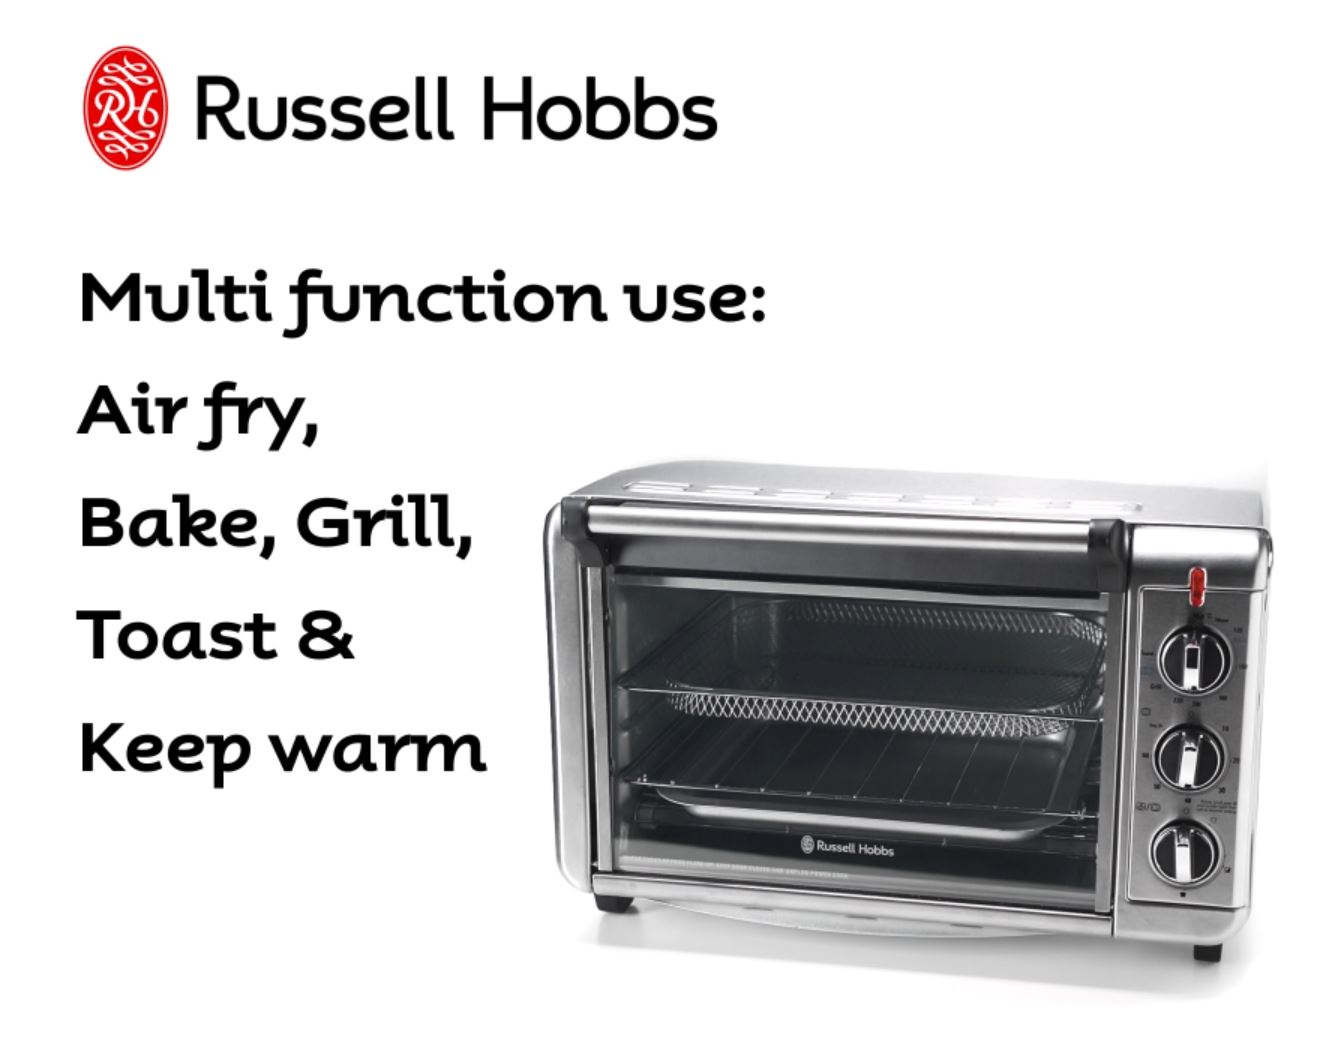 Crisp 'N Bake™ Air Fry 4-Slice Toaster Oven